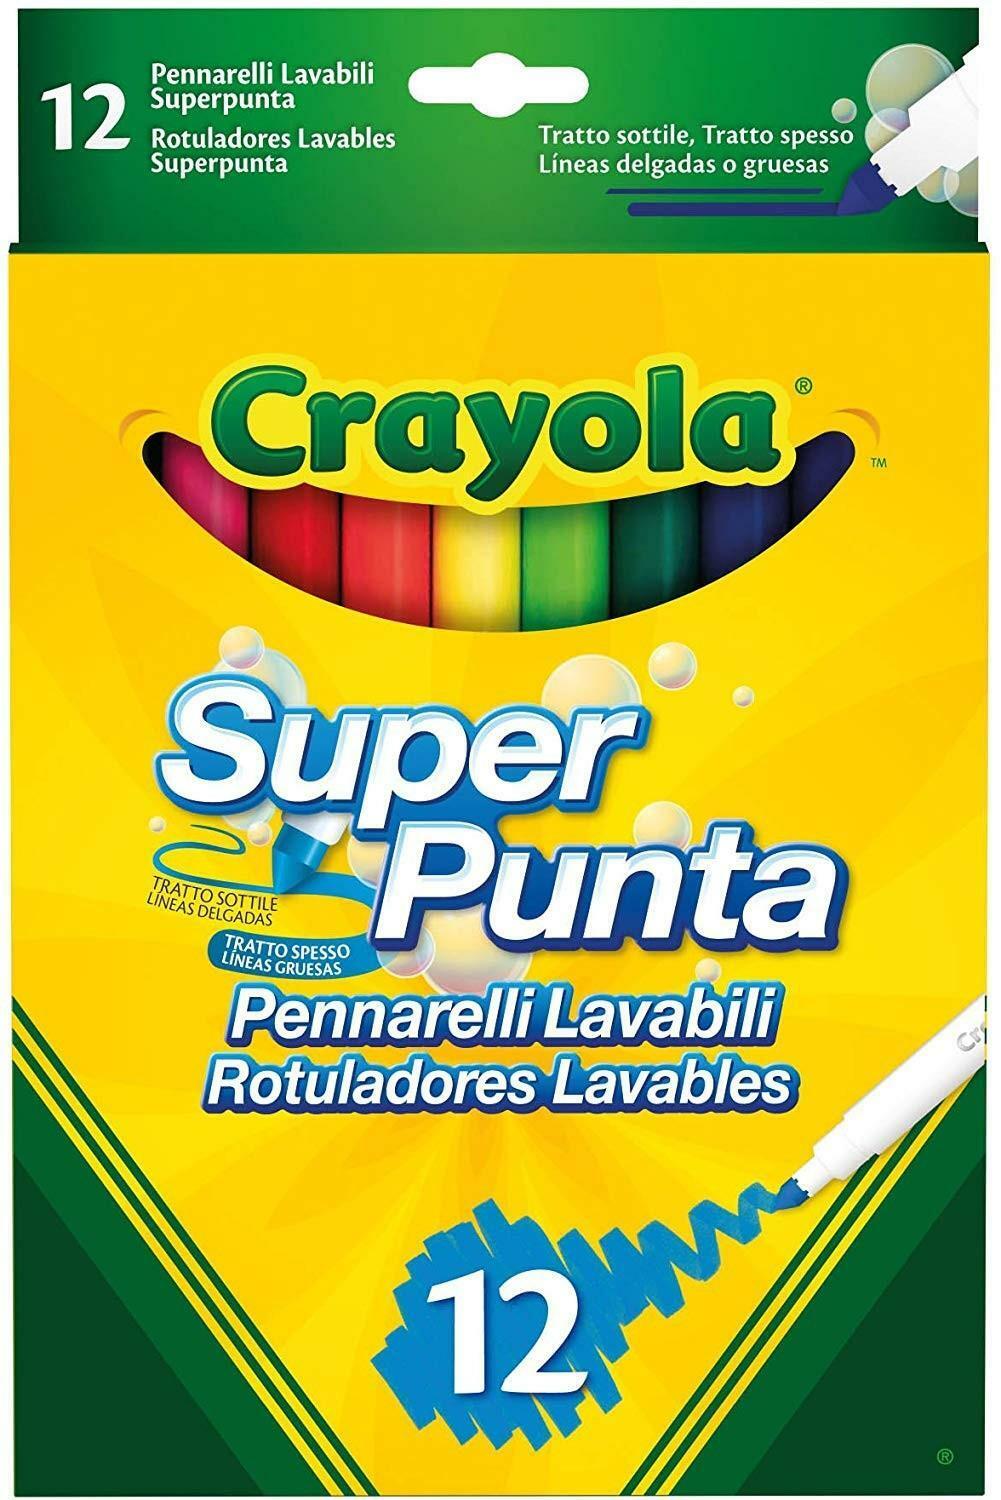 crayola 12 pennarelli lavabili superpunta